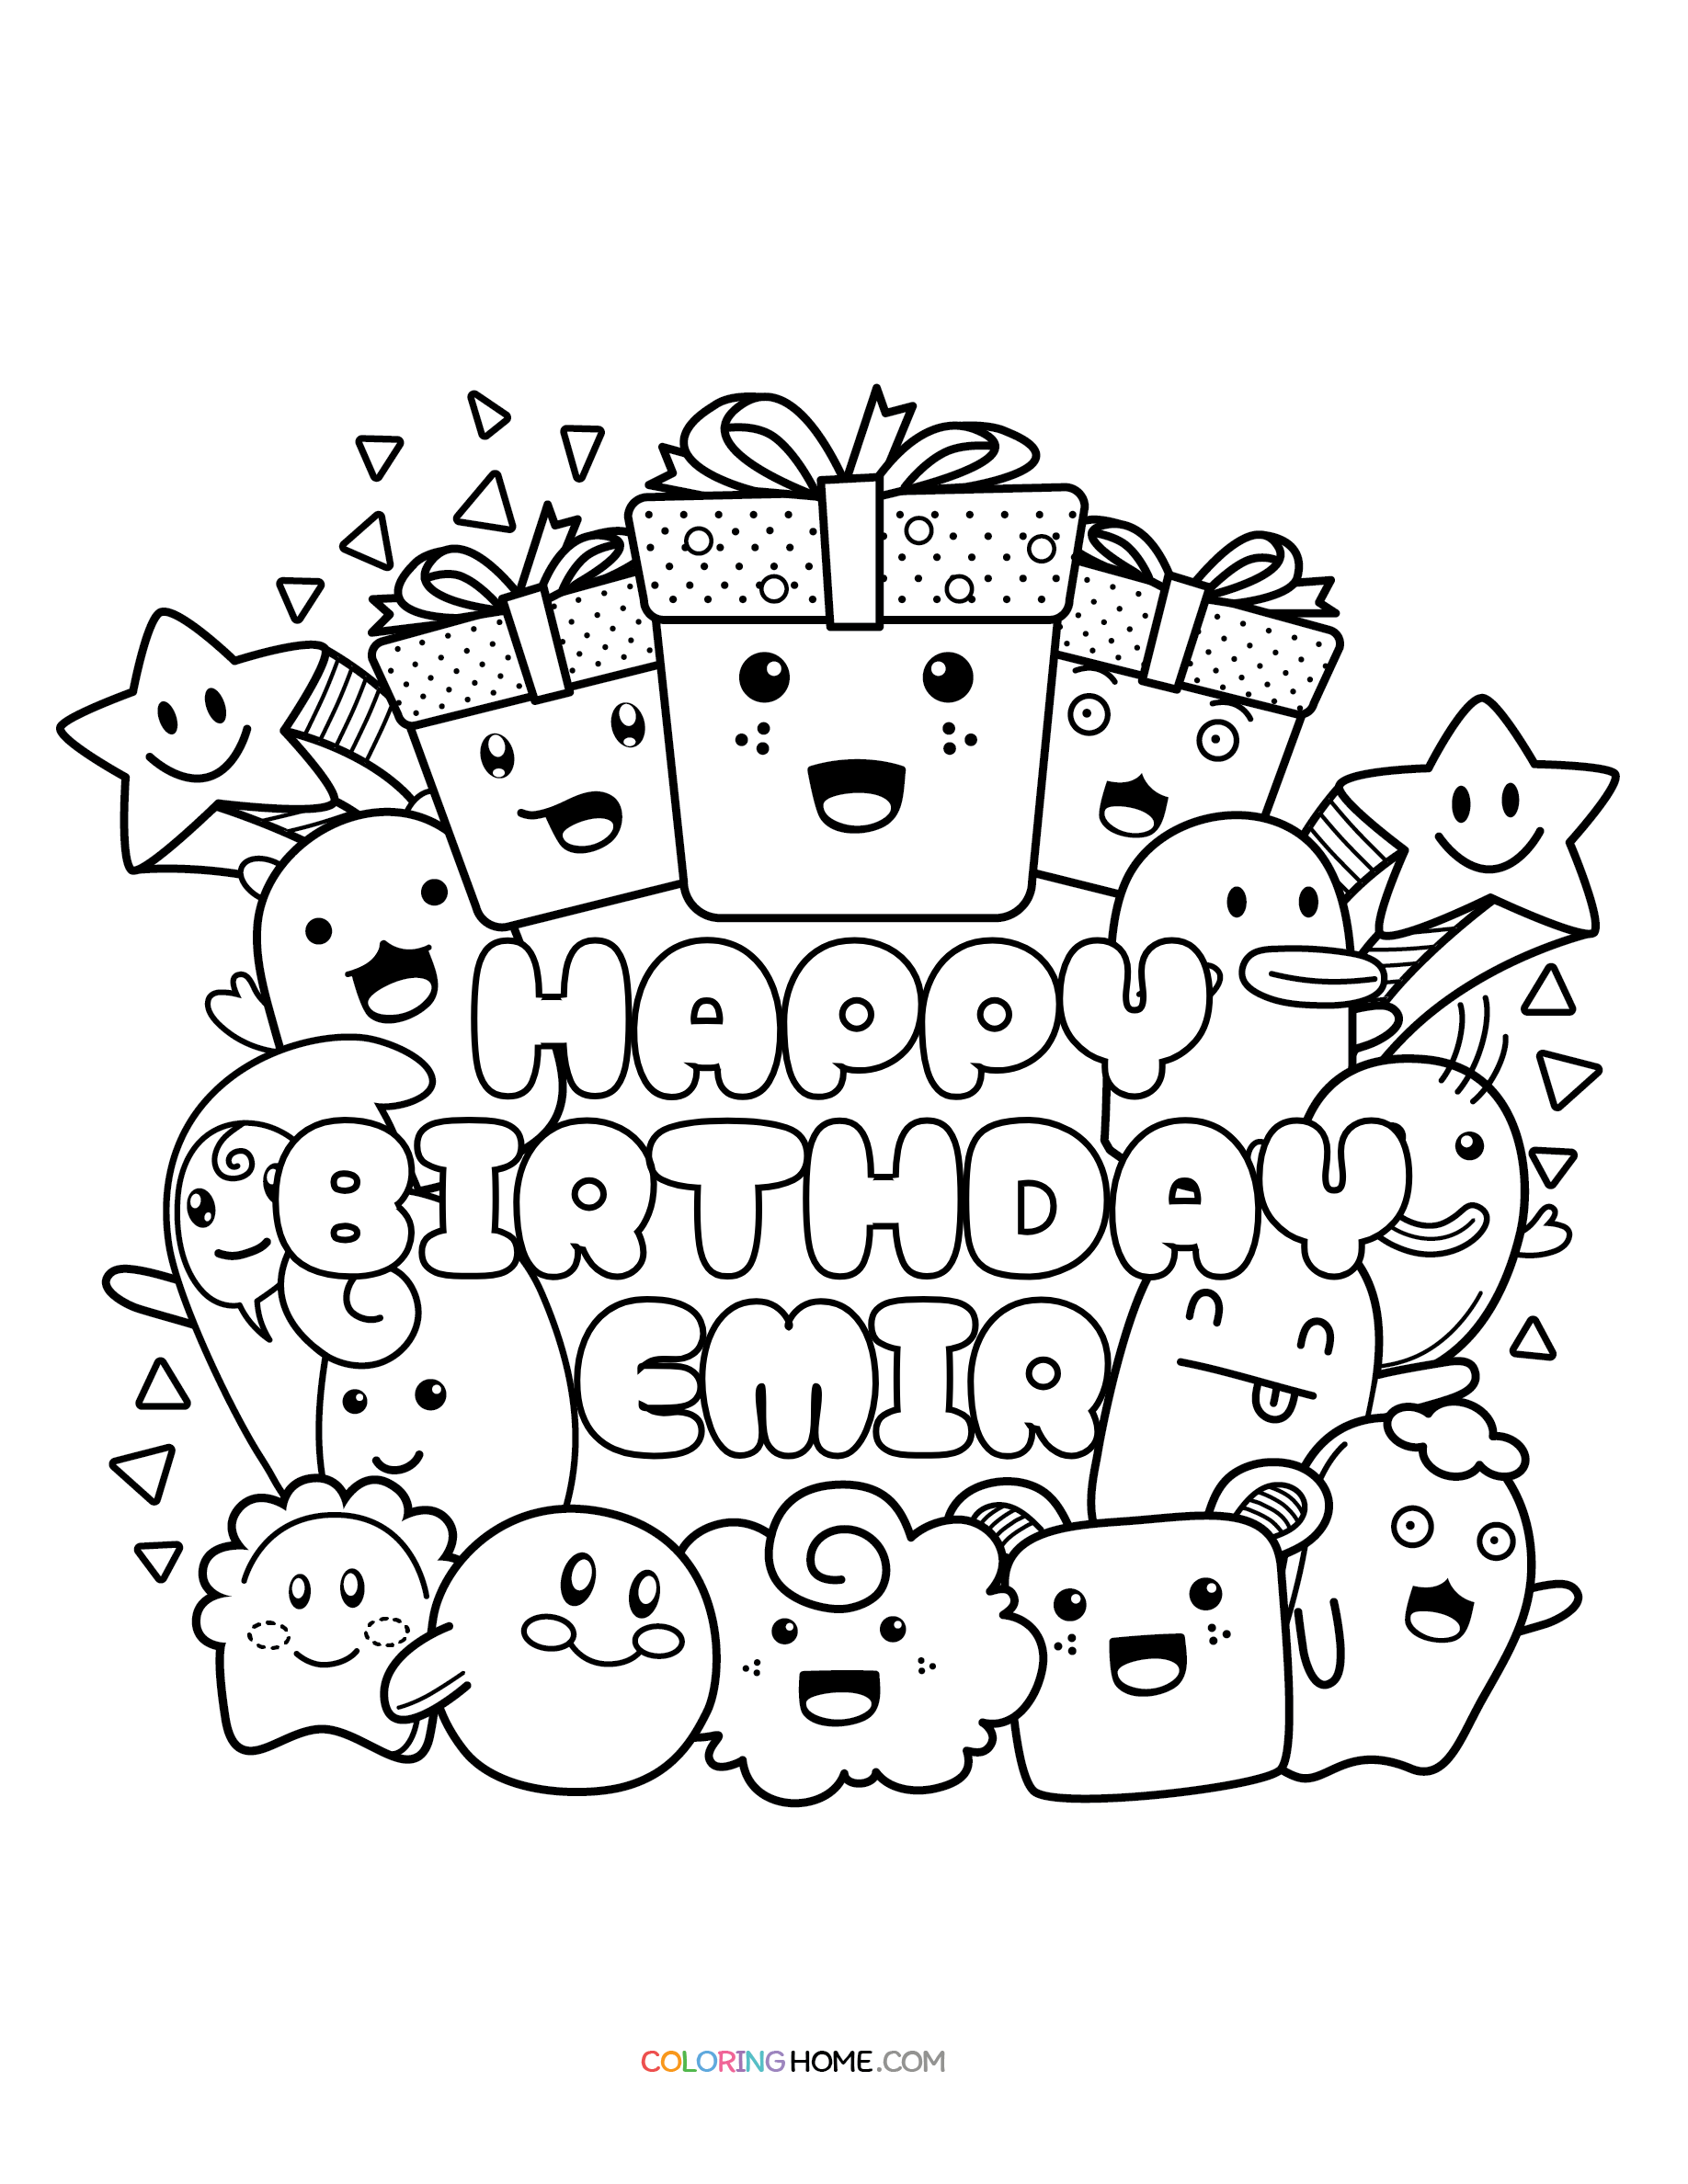 Happy Birthday Emir coloring page